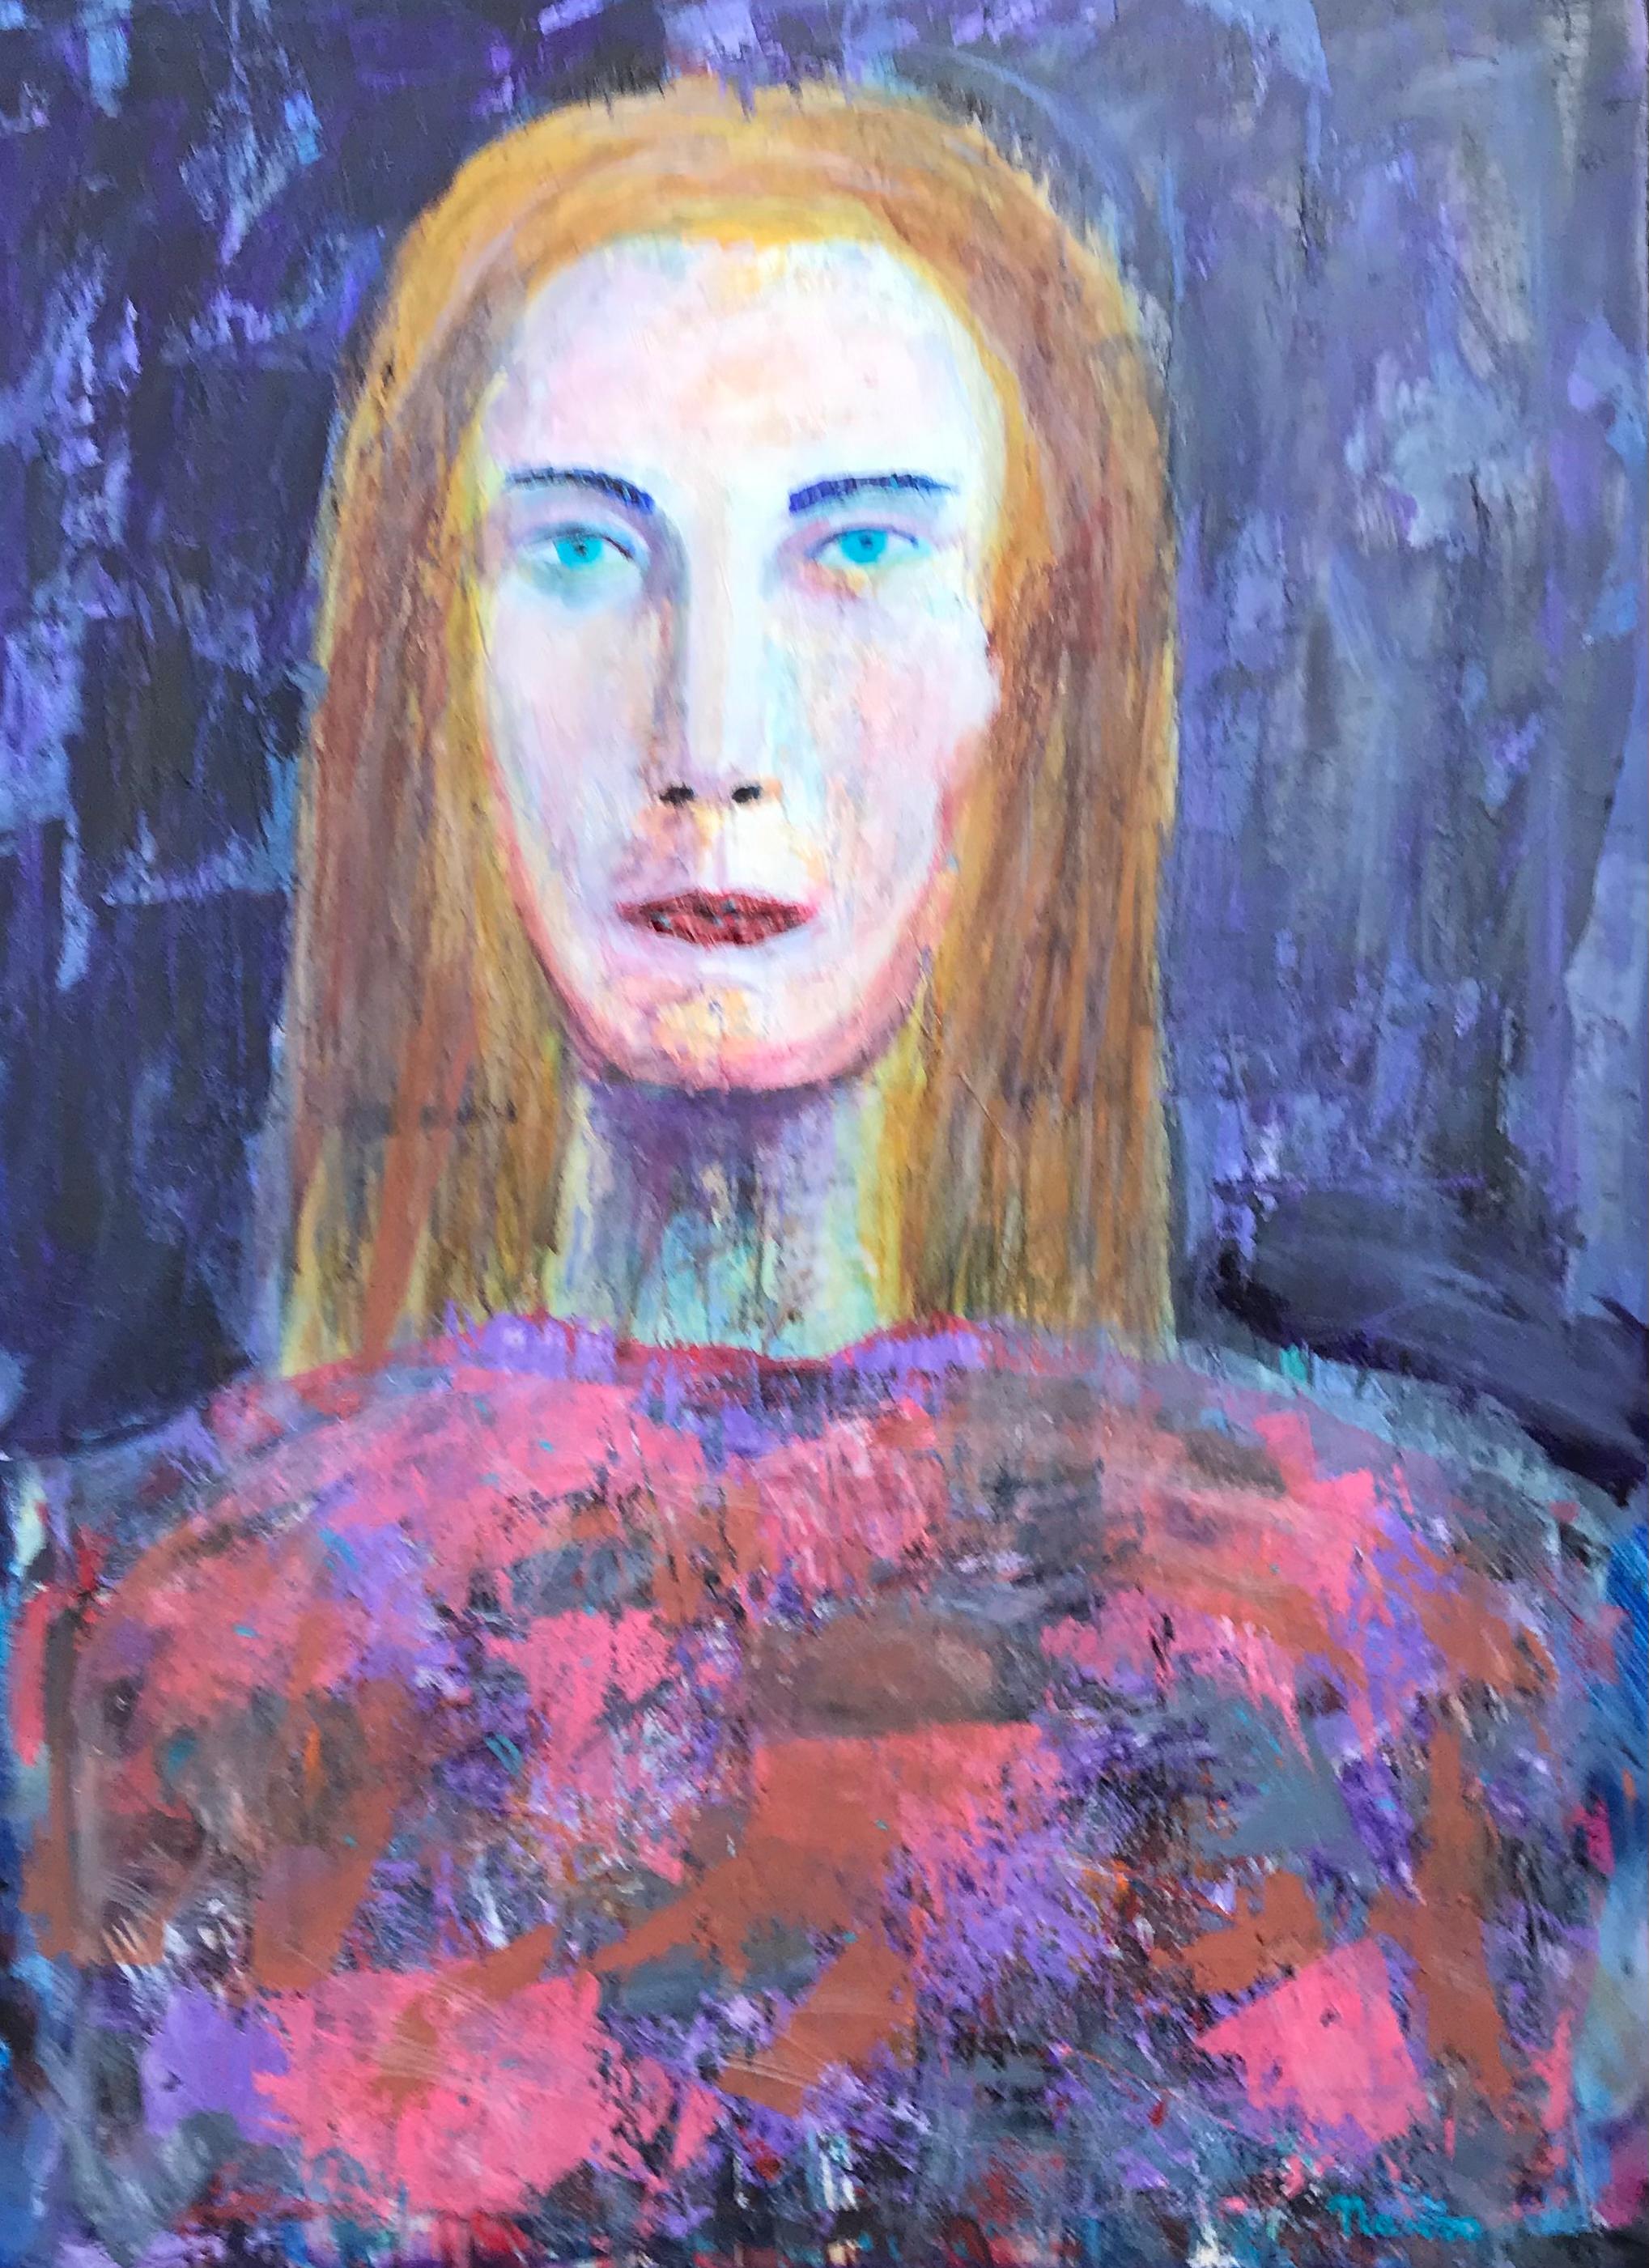 Pancho Malezanov Portrait Painting - My Ex - Modern Art Portrait Acrylic Painting Colors Lilac Blue Orange Red Yellow